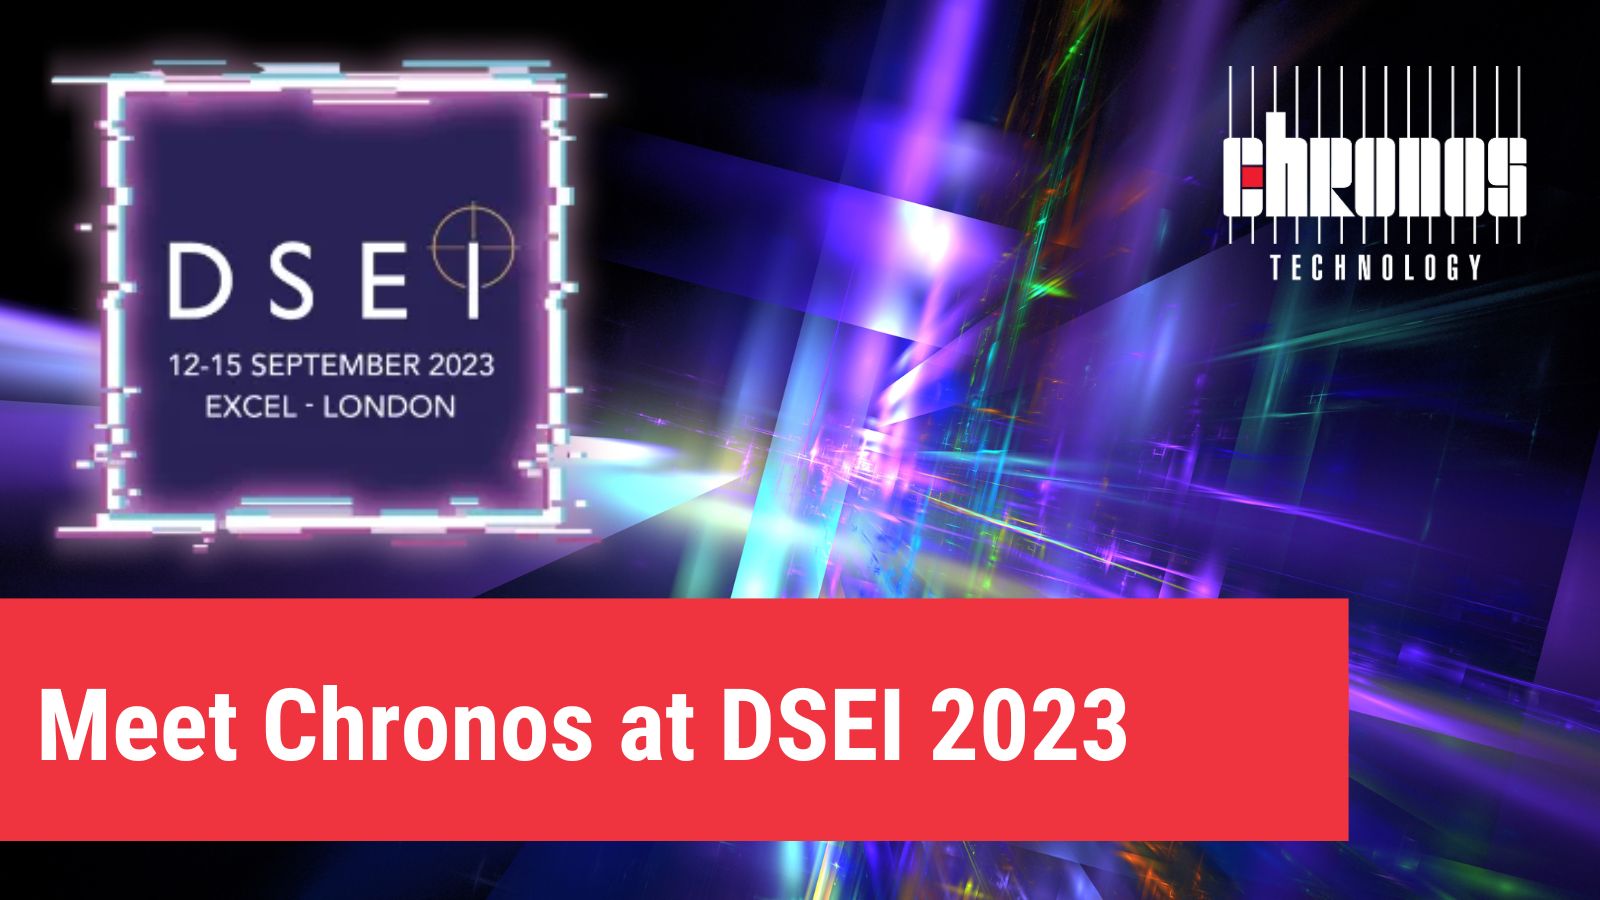 Meet Chronos at DSEI 2023